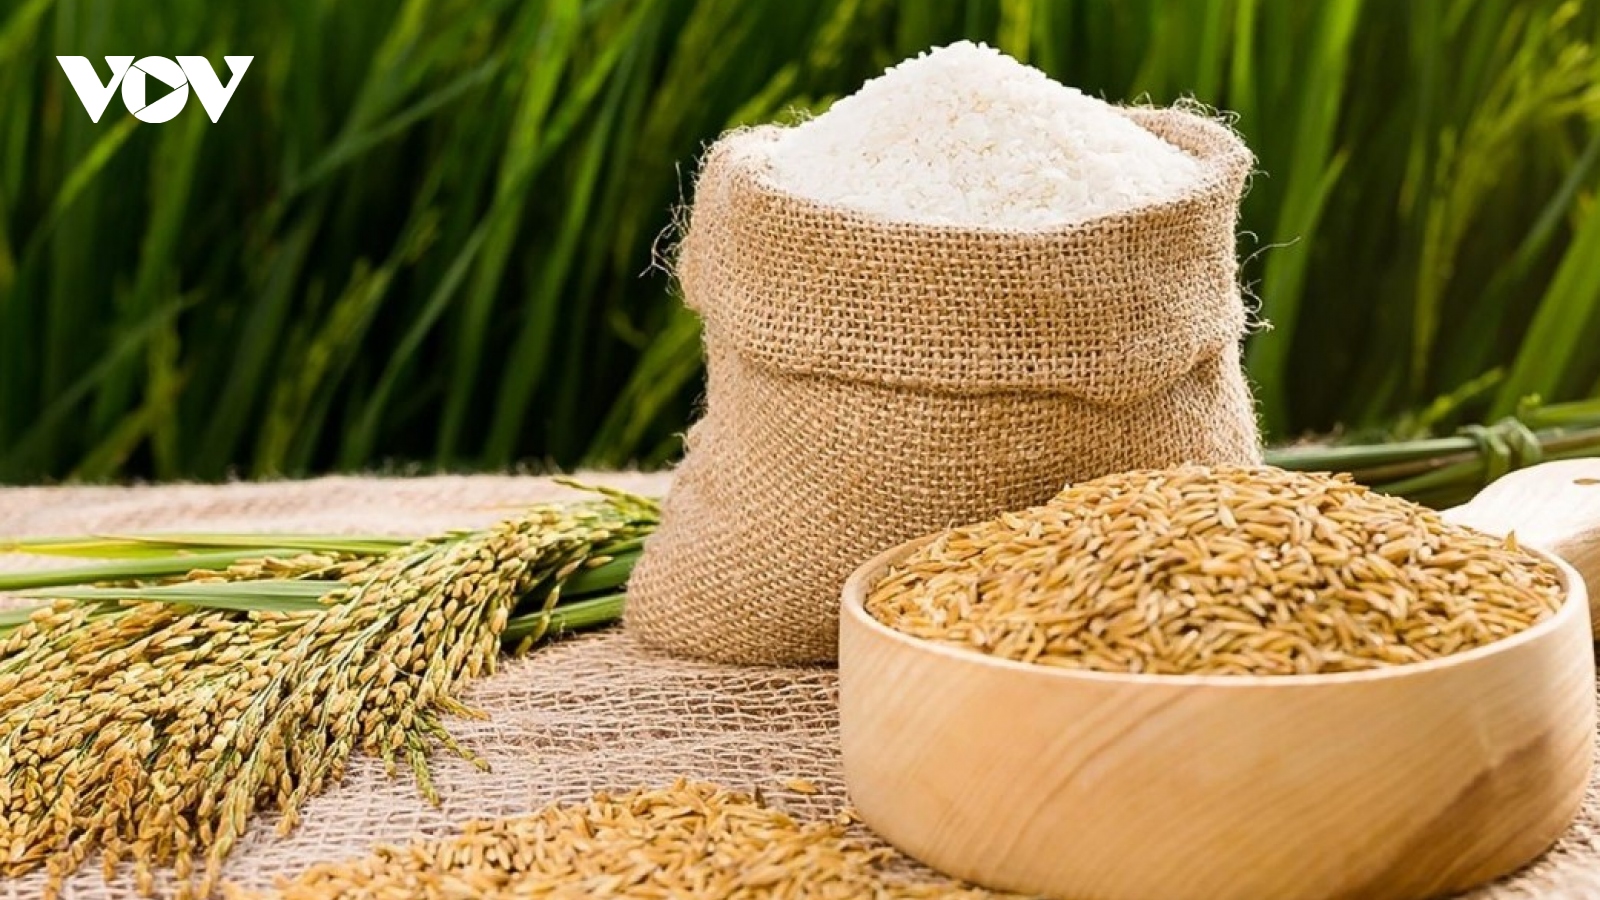 Vietnamese rice export price now highest in world market